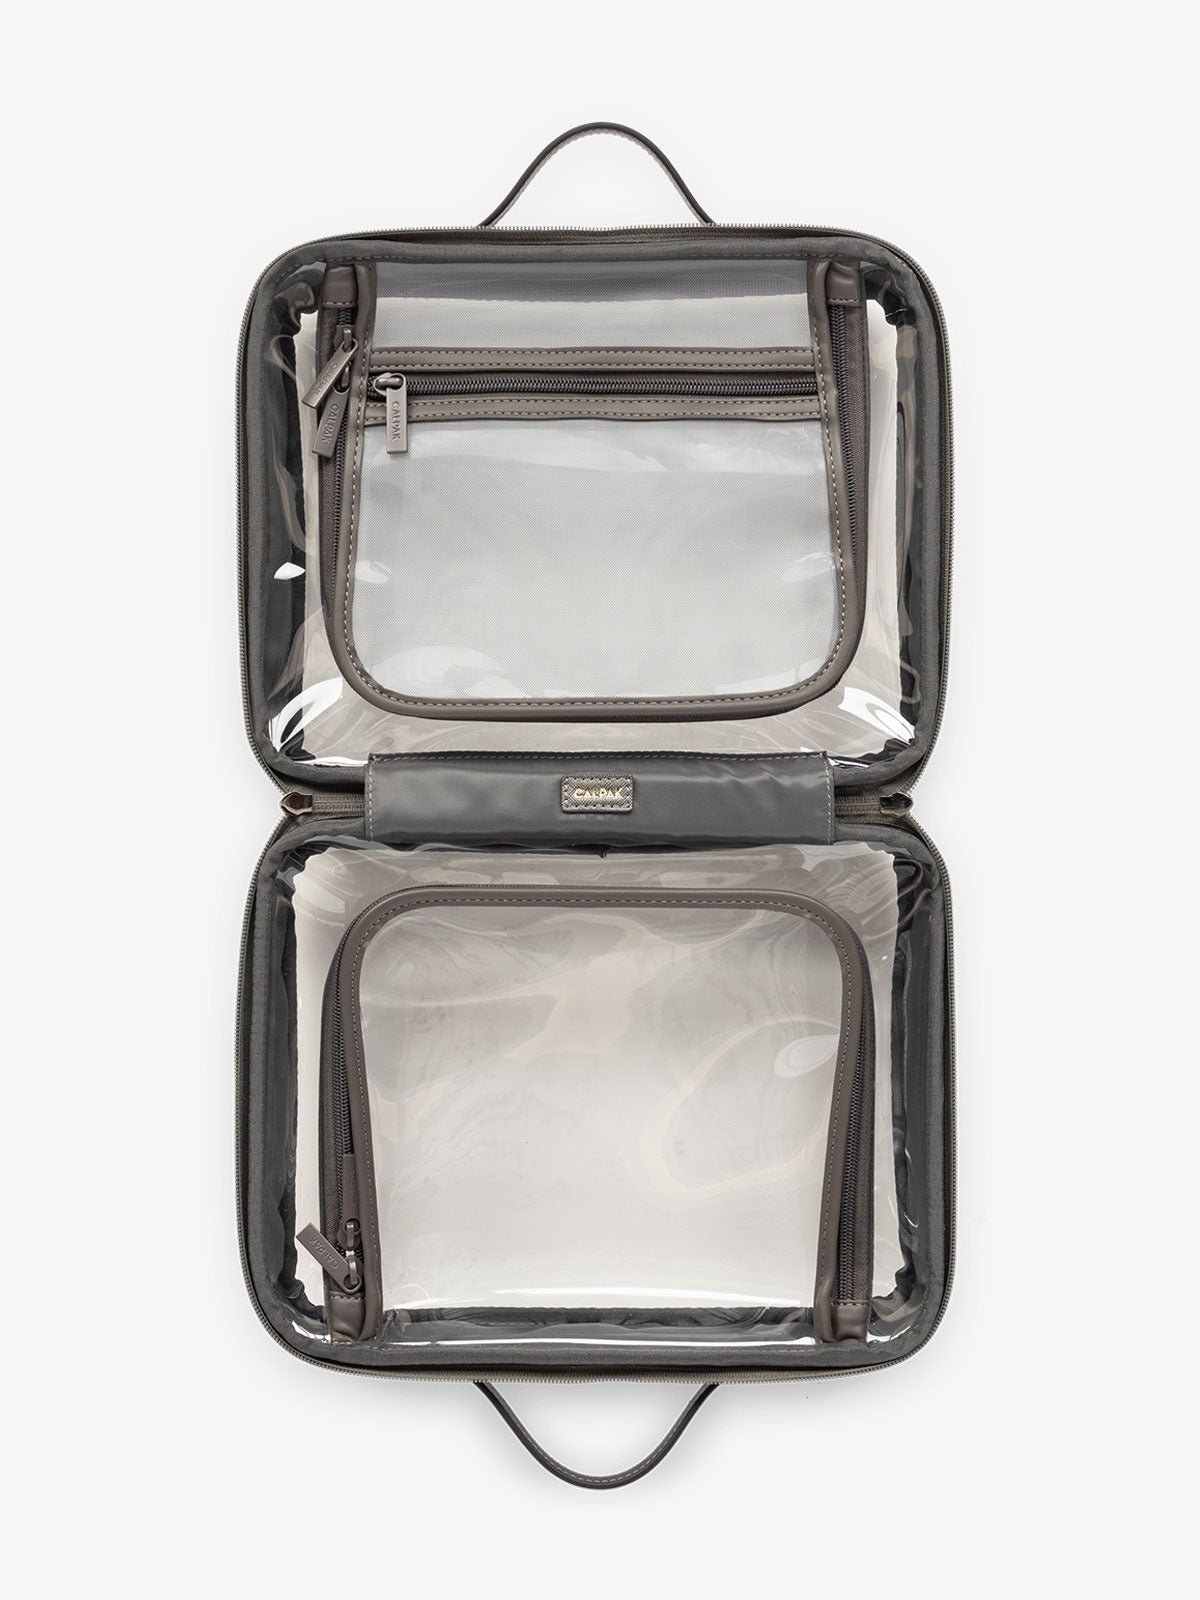 CALPAK large transparent water resistant travel makeup bag with compartments in dark gray metallic